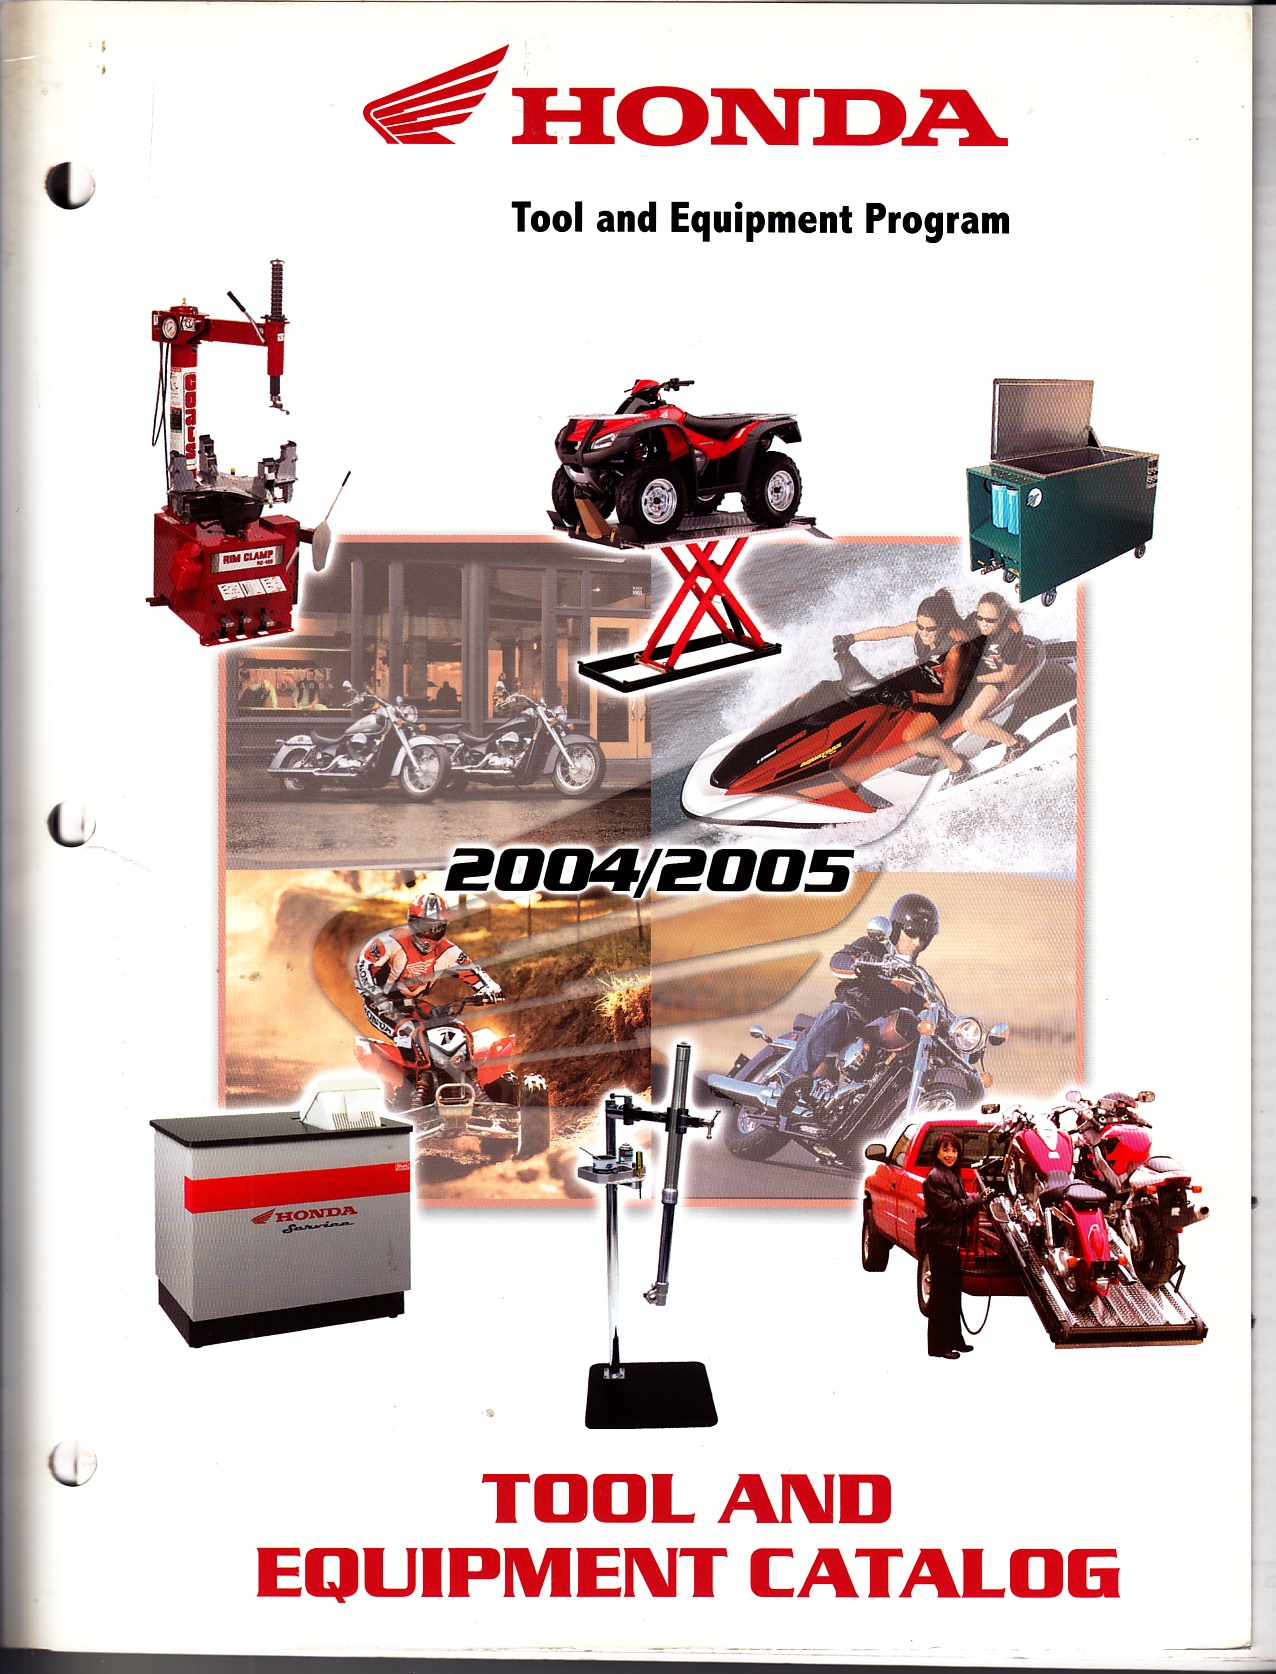 Image for Honda Tool and Equipment Program 2004/2005 Tool and Equipment Catalog